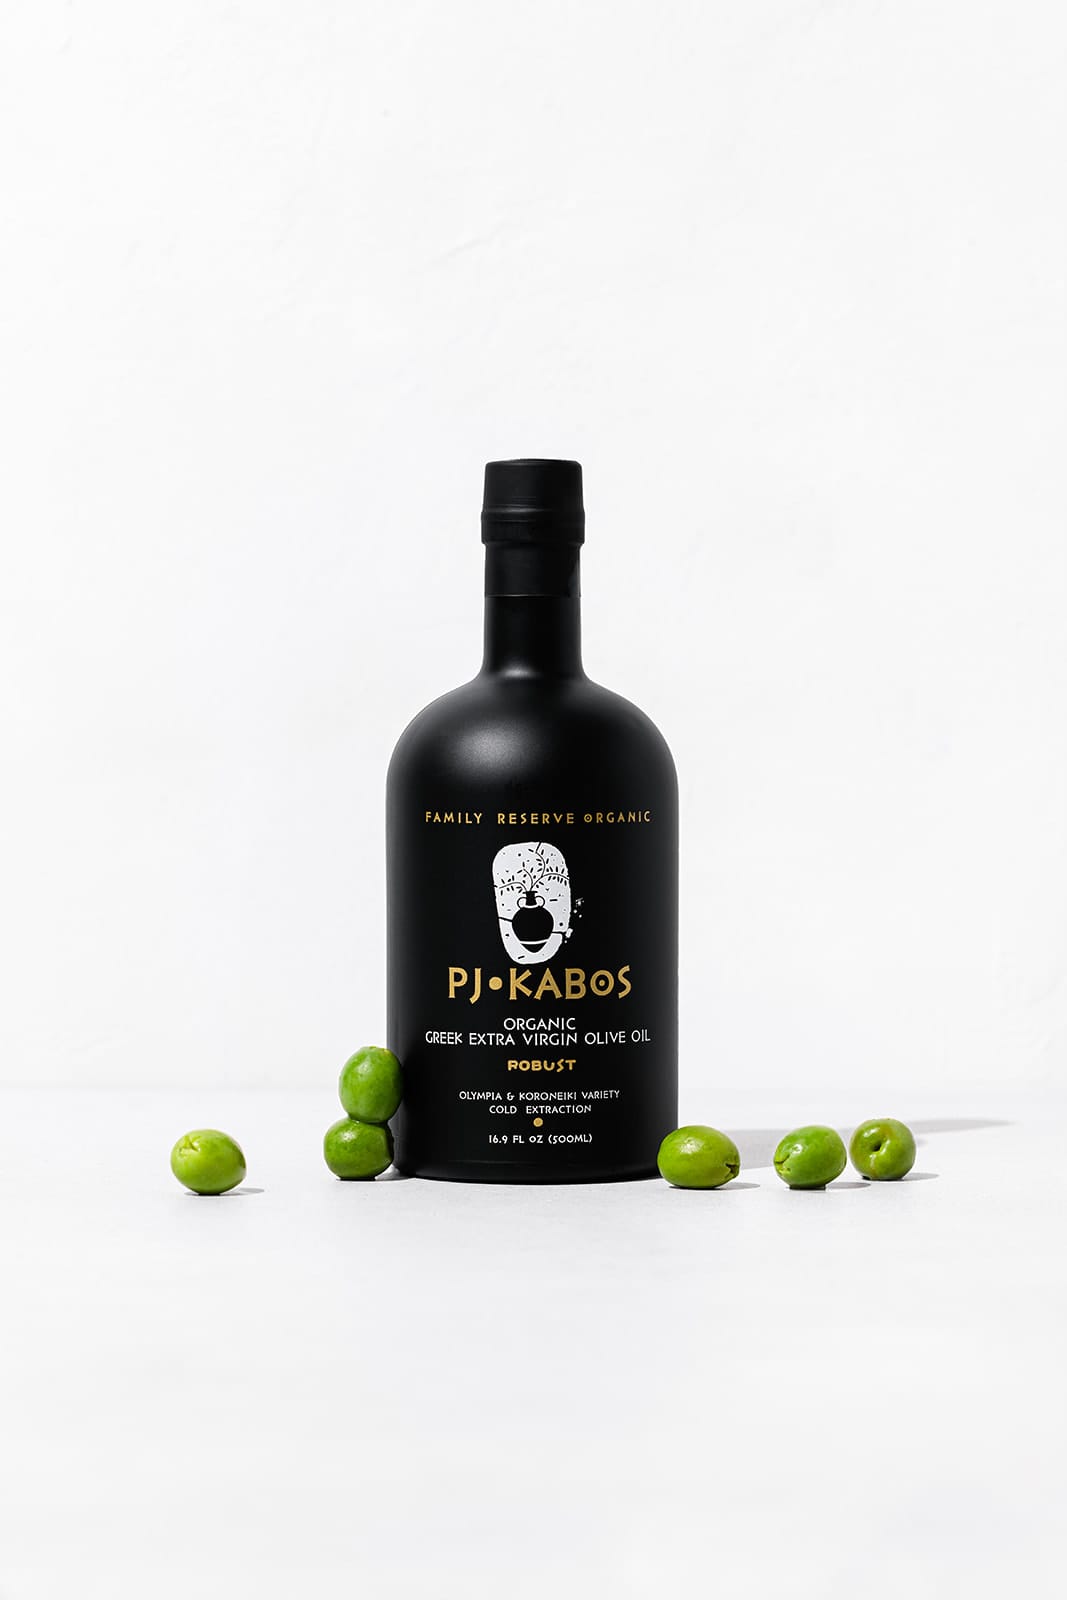 A black bottle of VERY HIGH-PHENOLIC & ORGANIC PJ Kabos Extra Virgin Olive Oil.